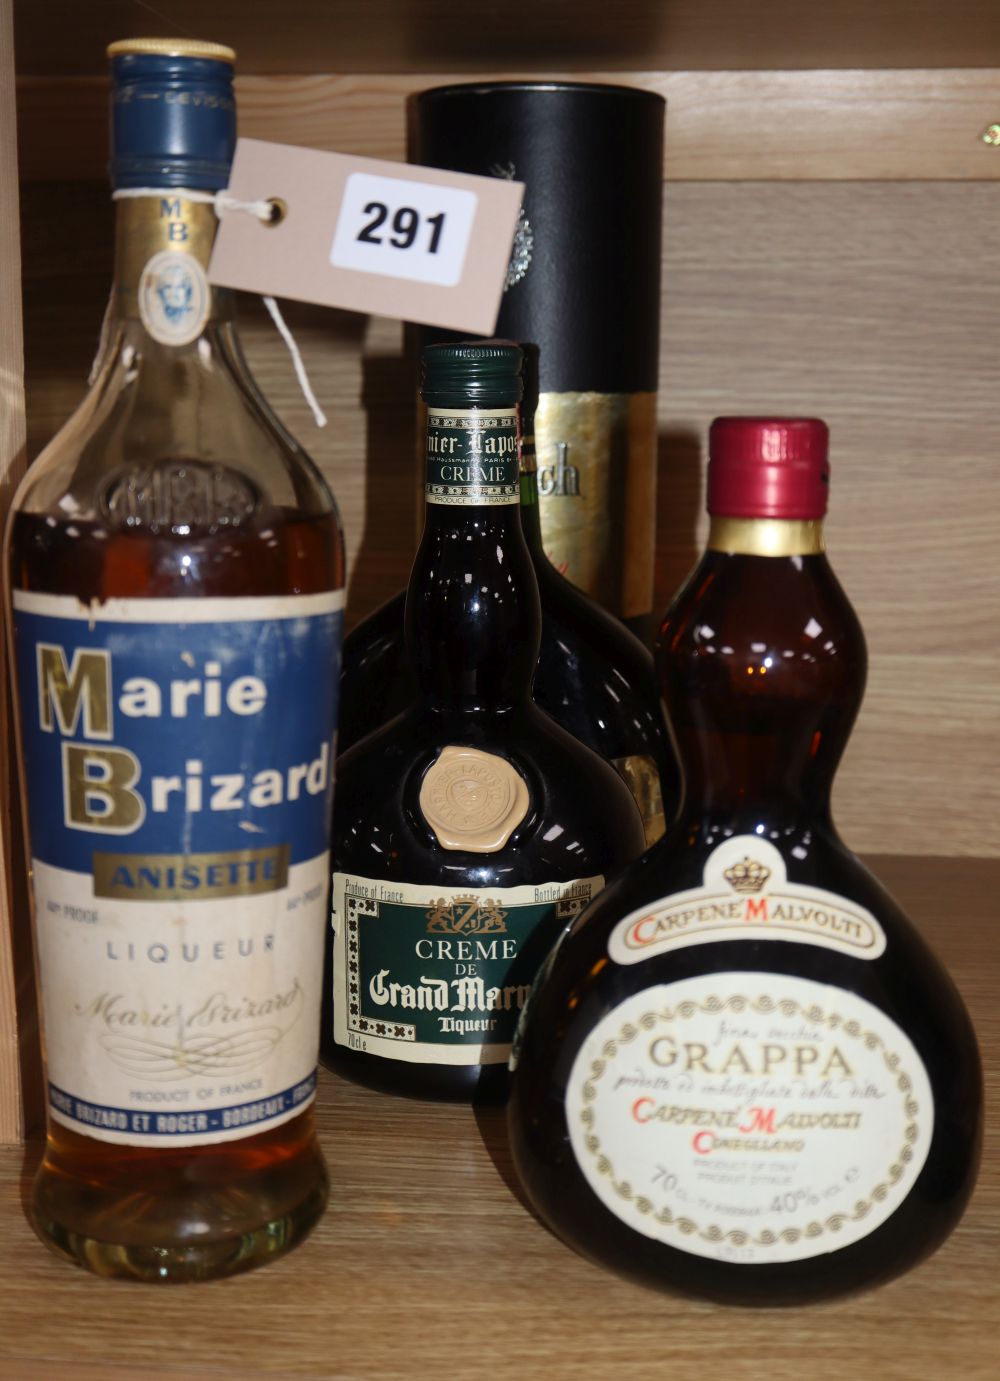 A bottle of Glenfiddich, a bottle of Grappa, a bottle of Whisky Almateo liqueur, a bottle of Grand